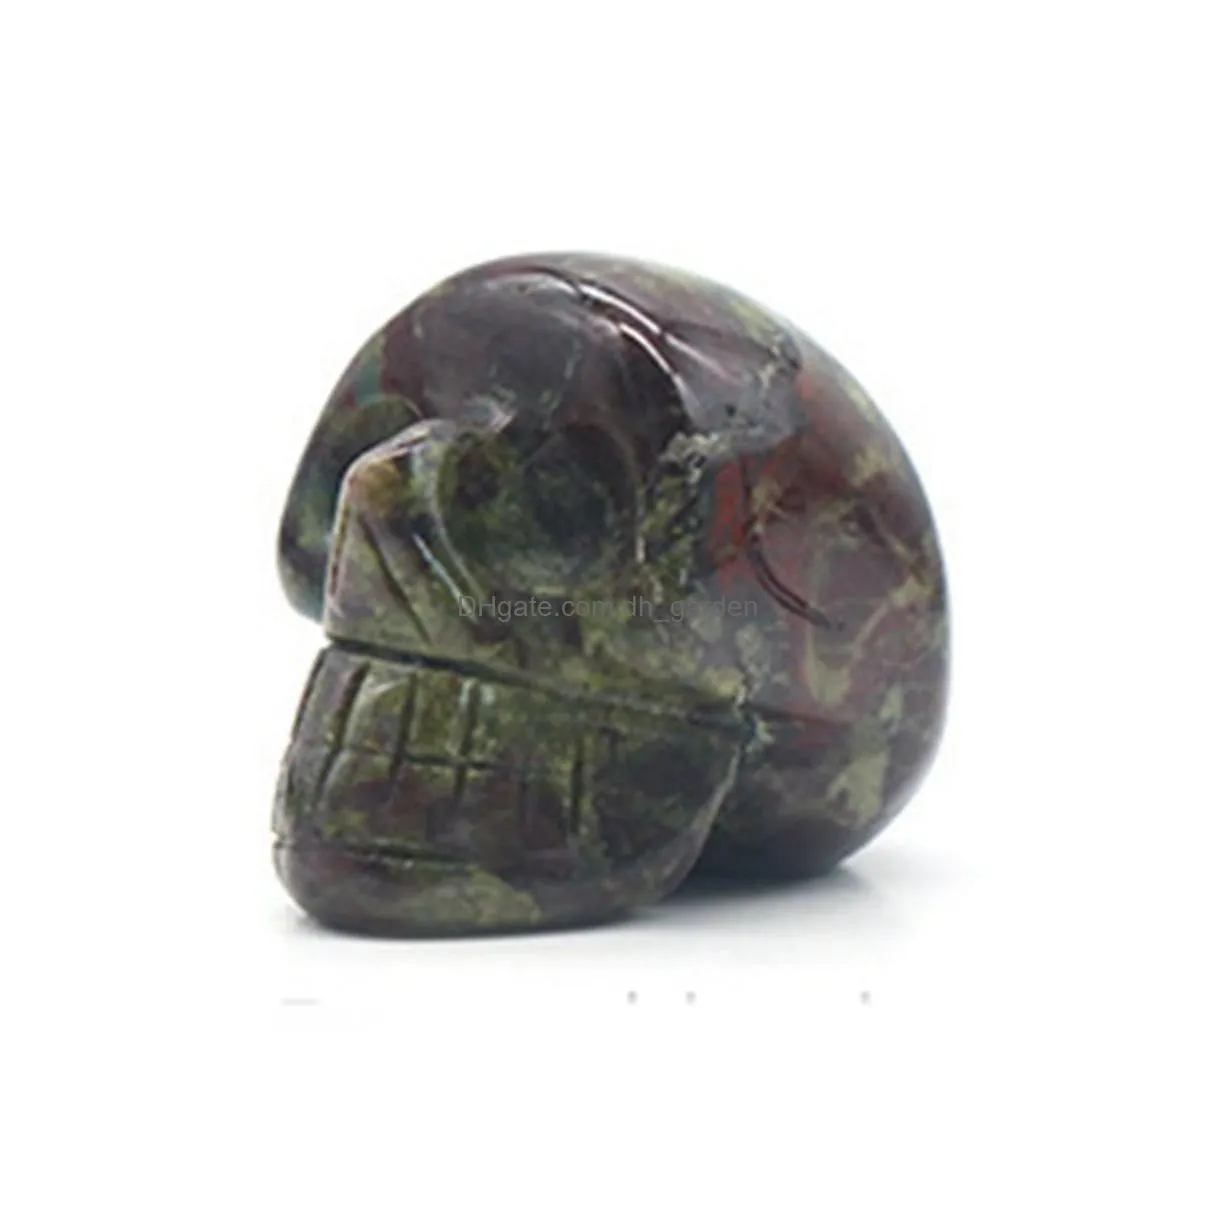 23mm natural rose quartz skull head decor statue hand carved polished gemstone human skull figurine pocket reiki healing stone for